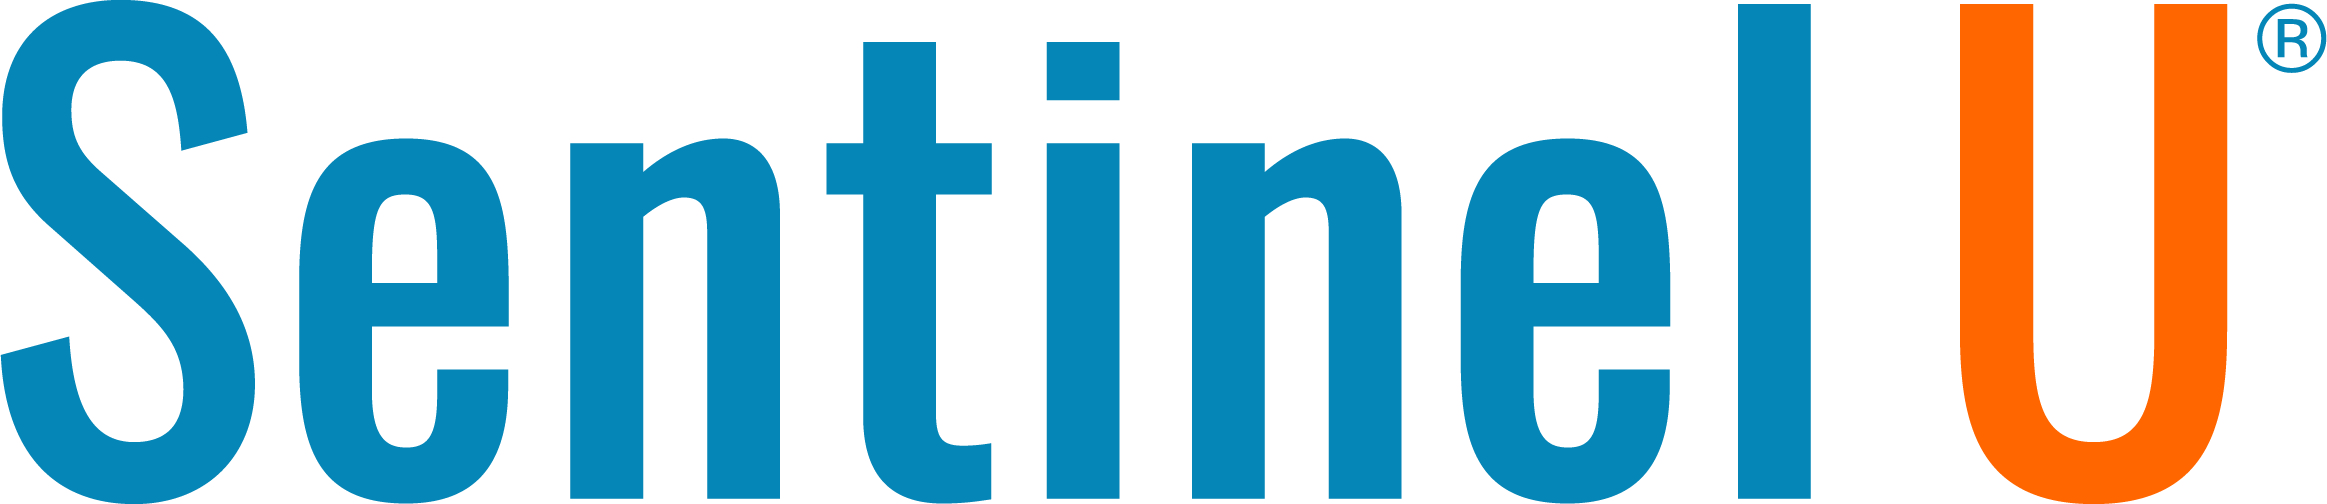 Sentinel U logo